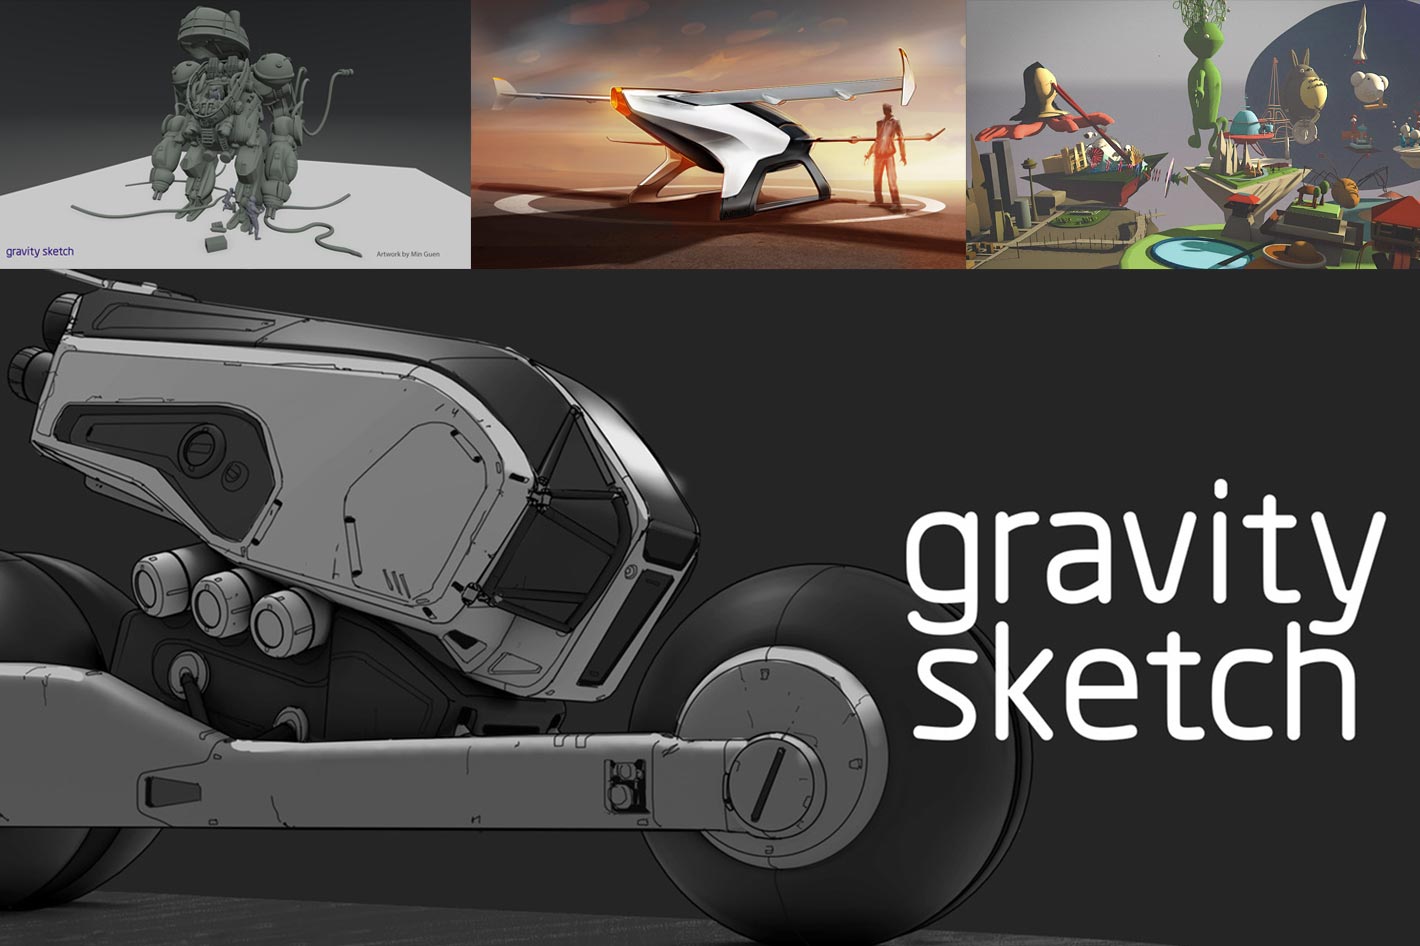 nabo på udtryk Gravity Sketch: set design and storyboarding in VR by Jose Antunes -  ProVideo Coalition